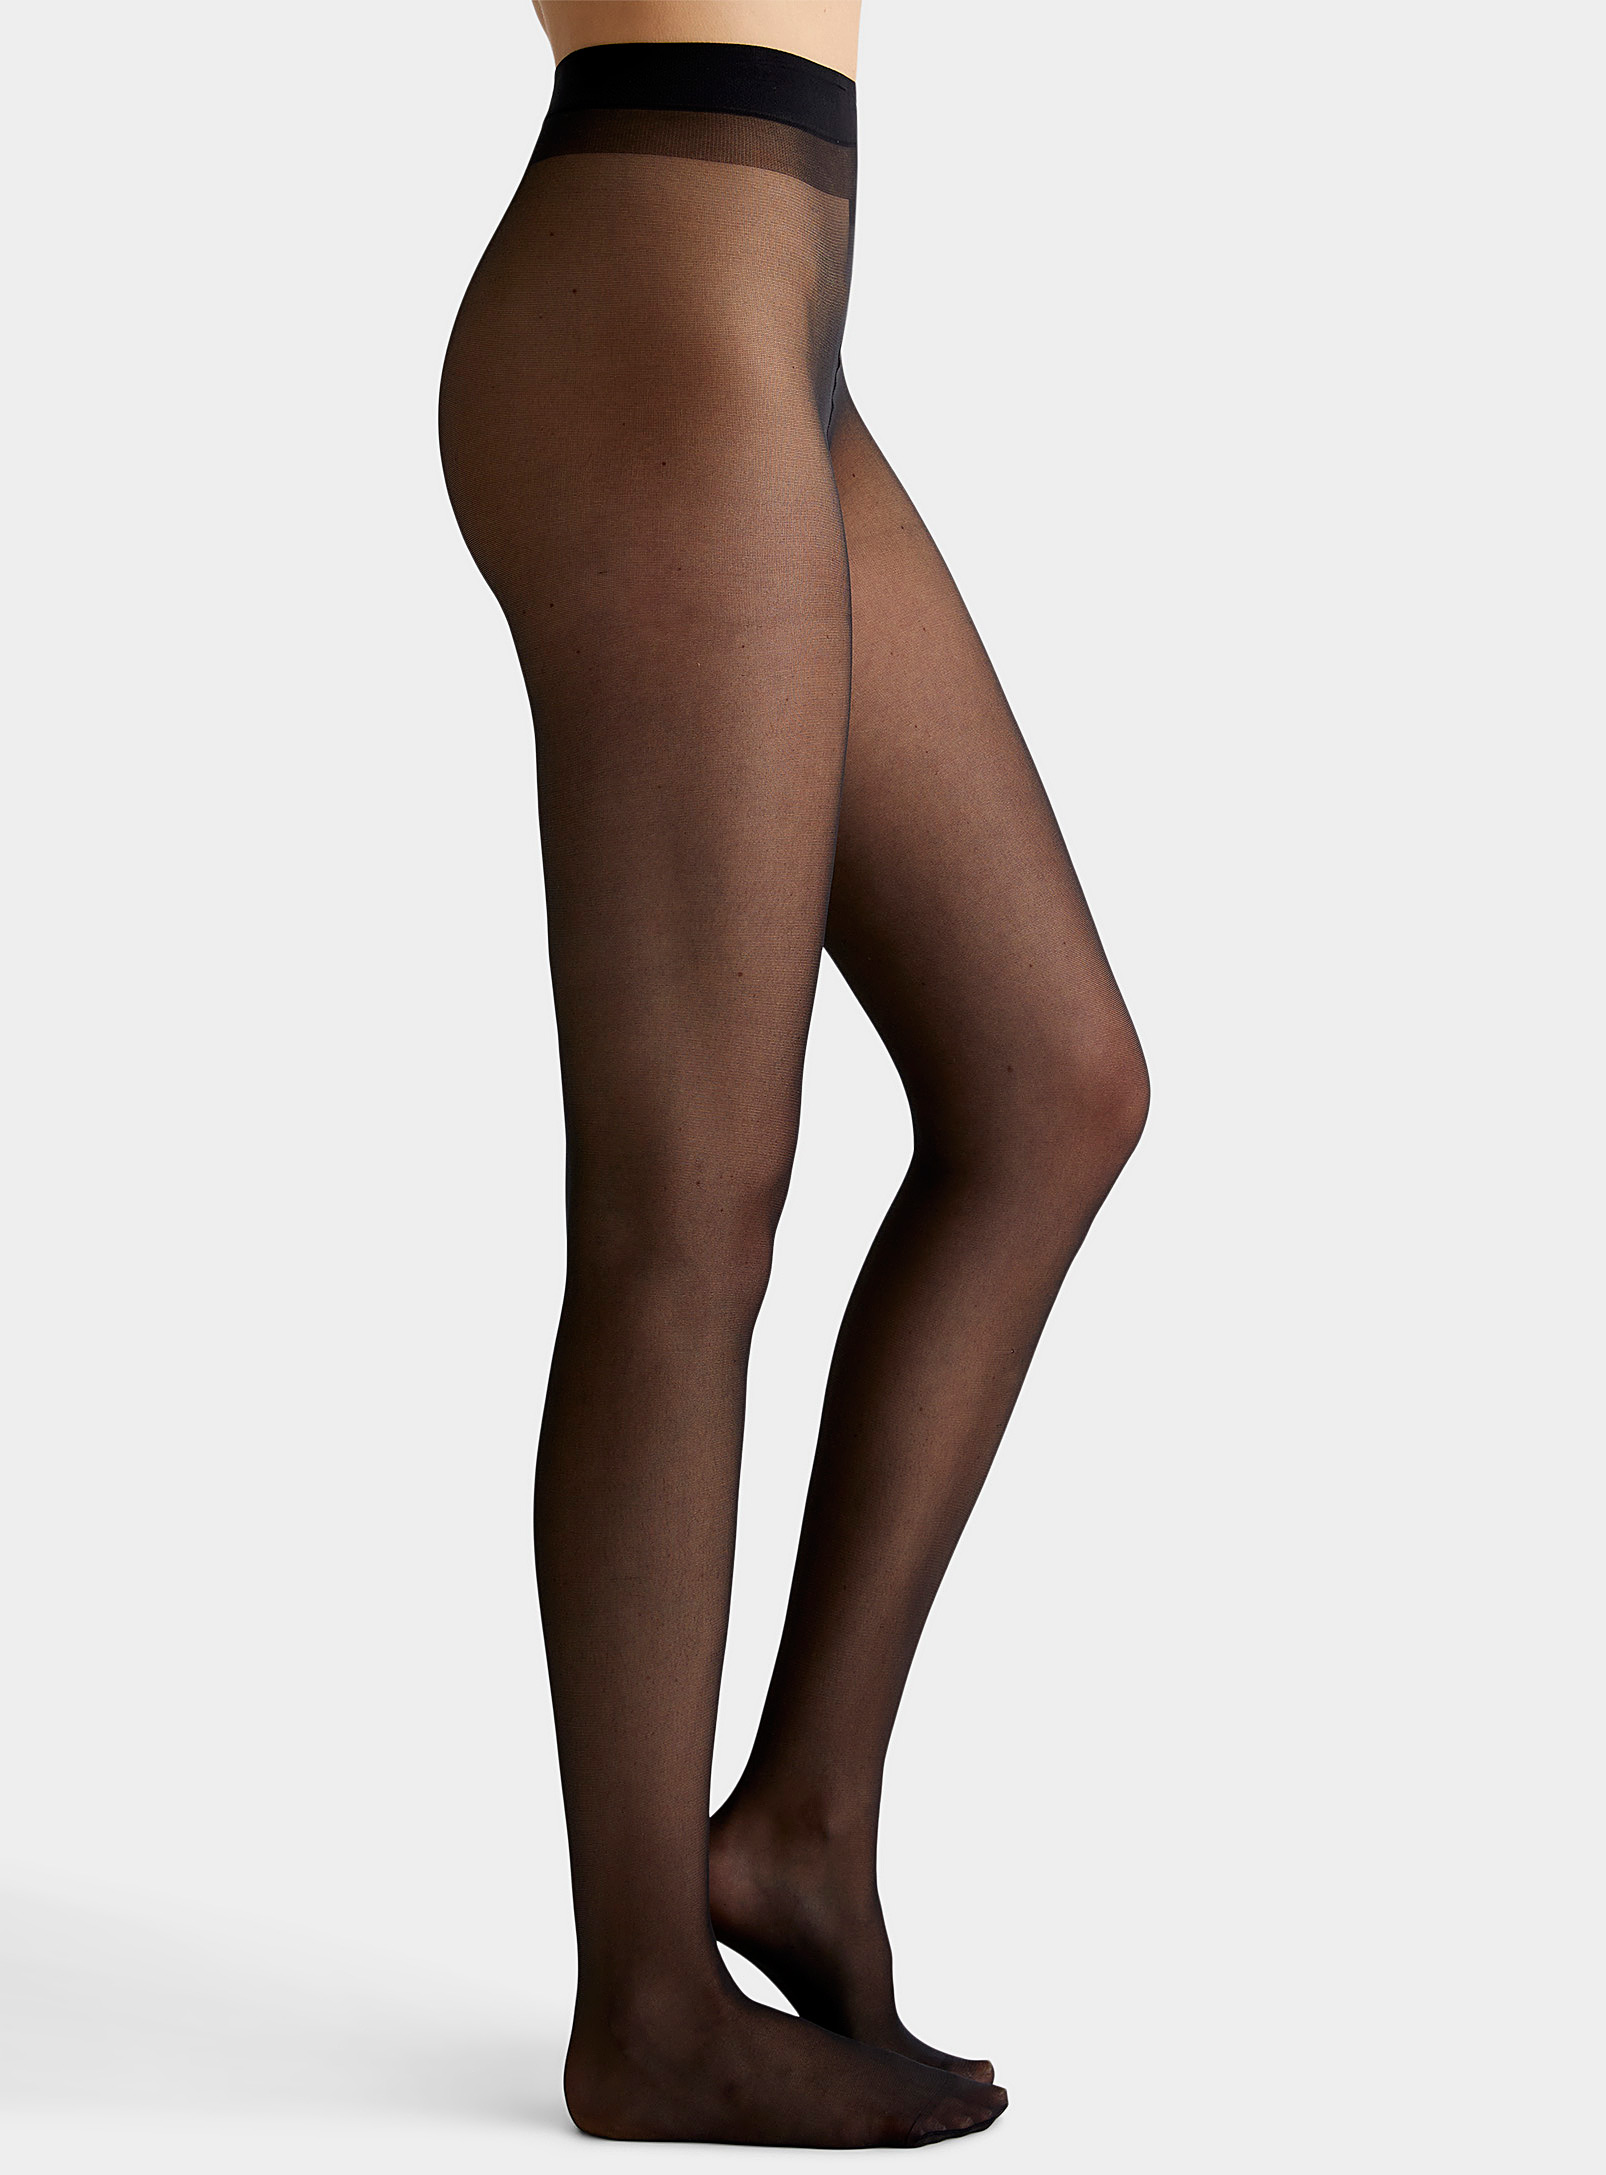 Swedish Stockings Elin Pantyhose Set Of 2 In Black